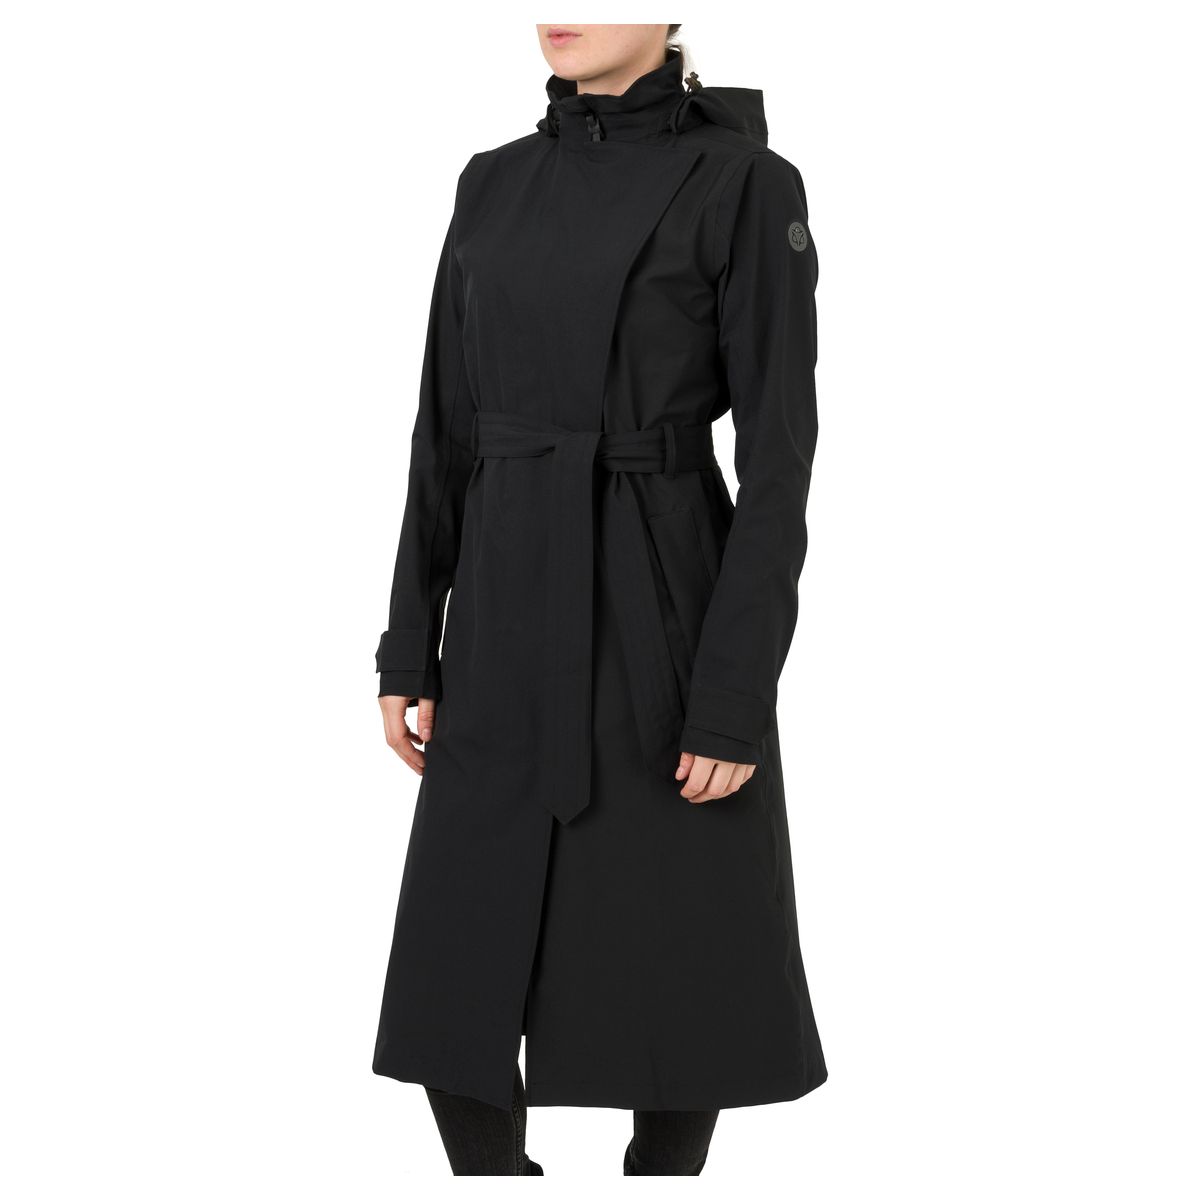 Trench Coat Long Chaqueta de lluvia Urban Outdoor Mujeres fit example